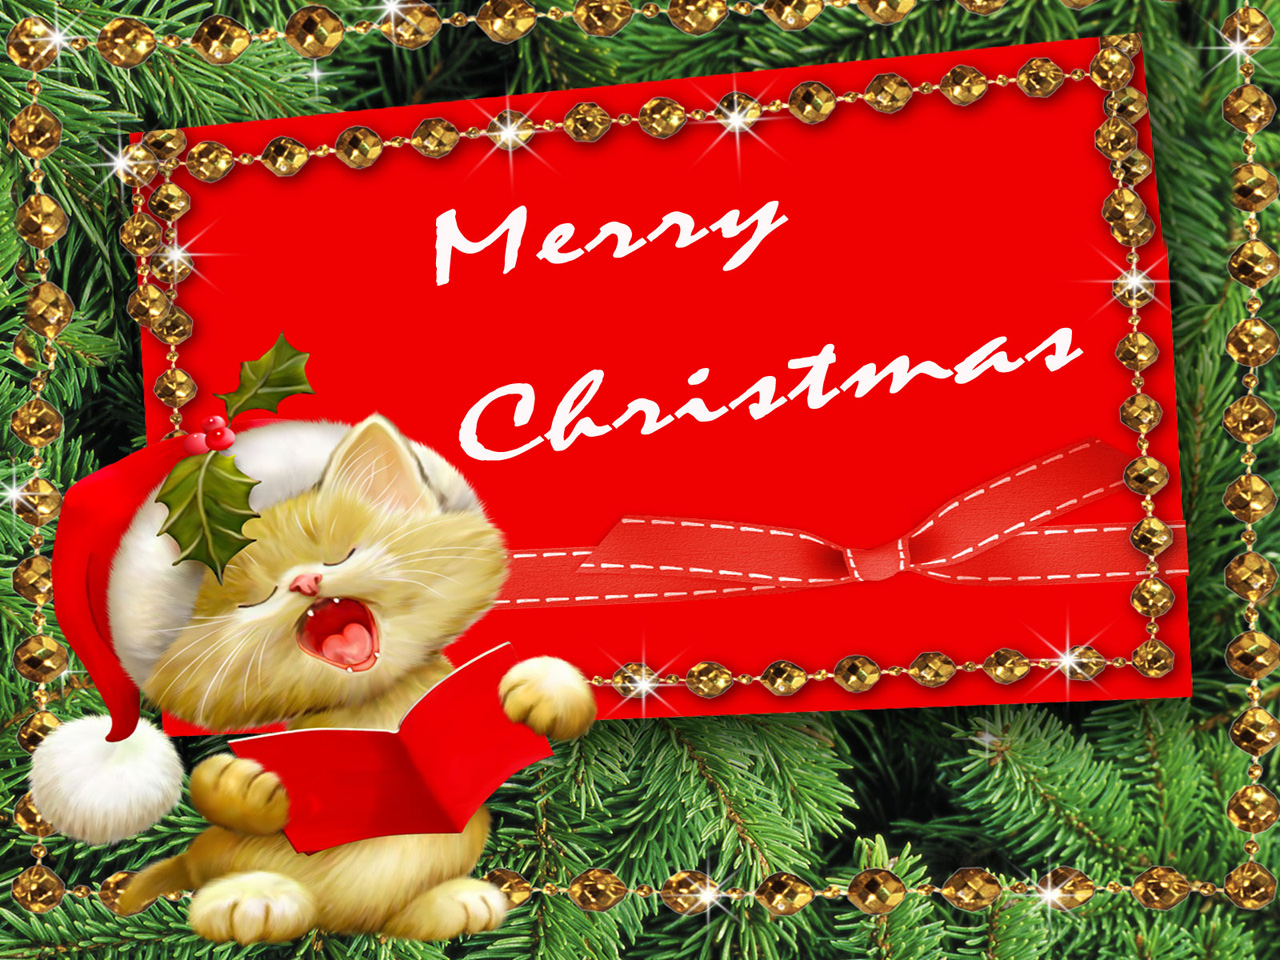 Merry Christmas Greetings HD Wallpaper And Desktop